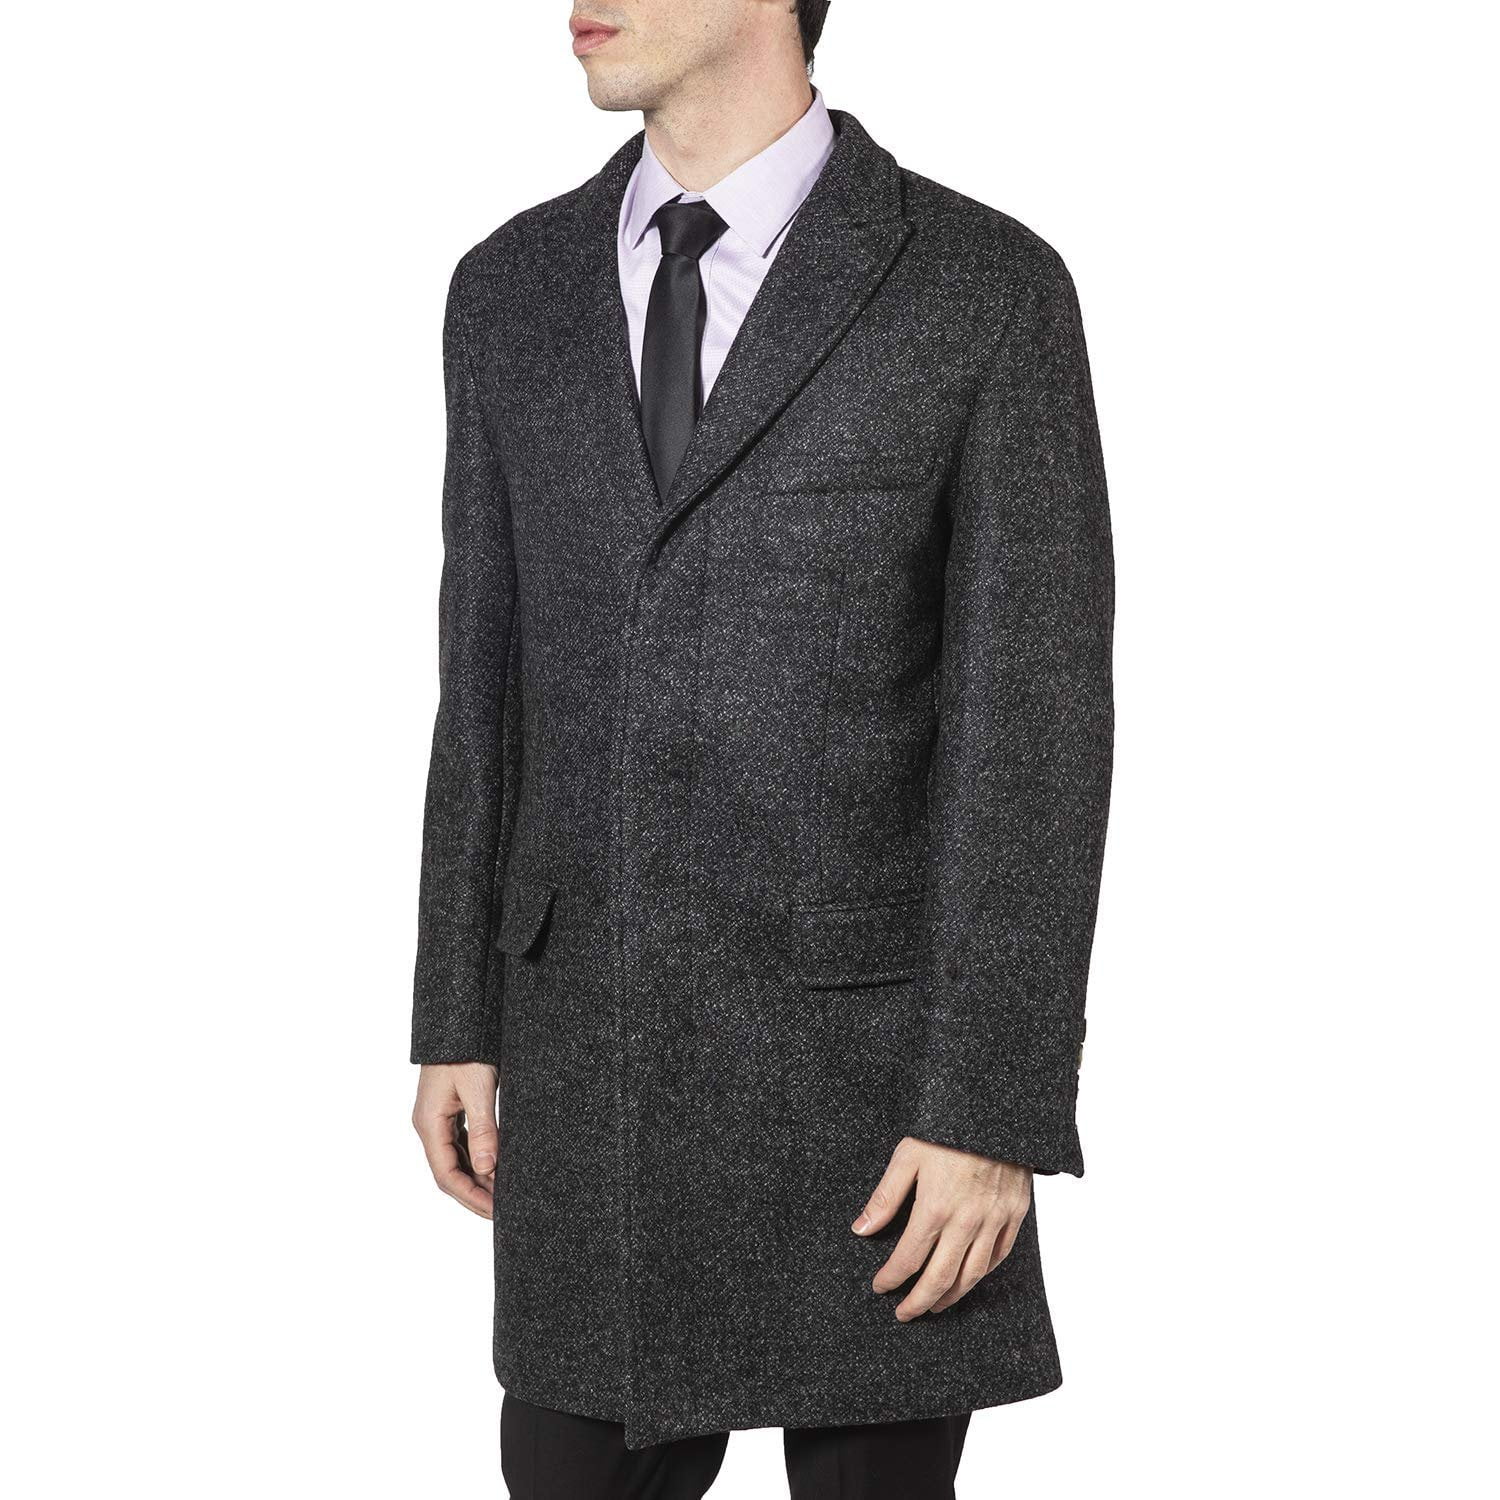 Mens Solid Navy Blue 3/4 Length Wool Blend Overcoat Top Coat With Peak Lapels 